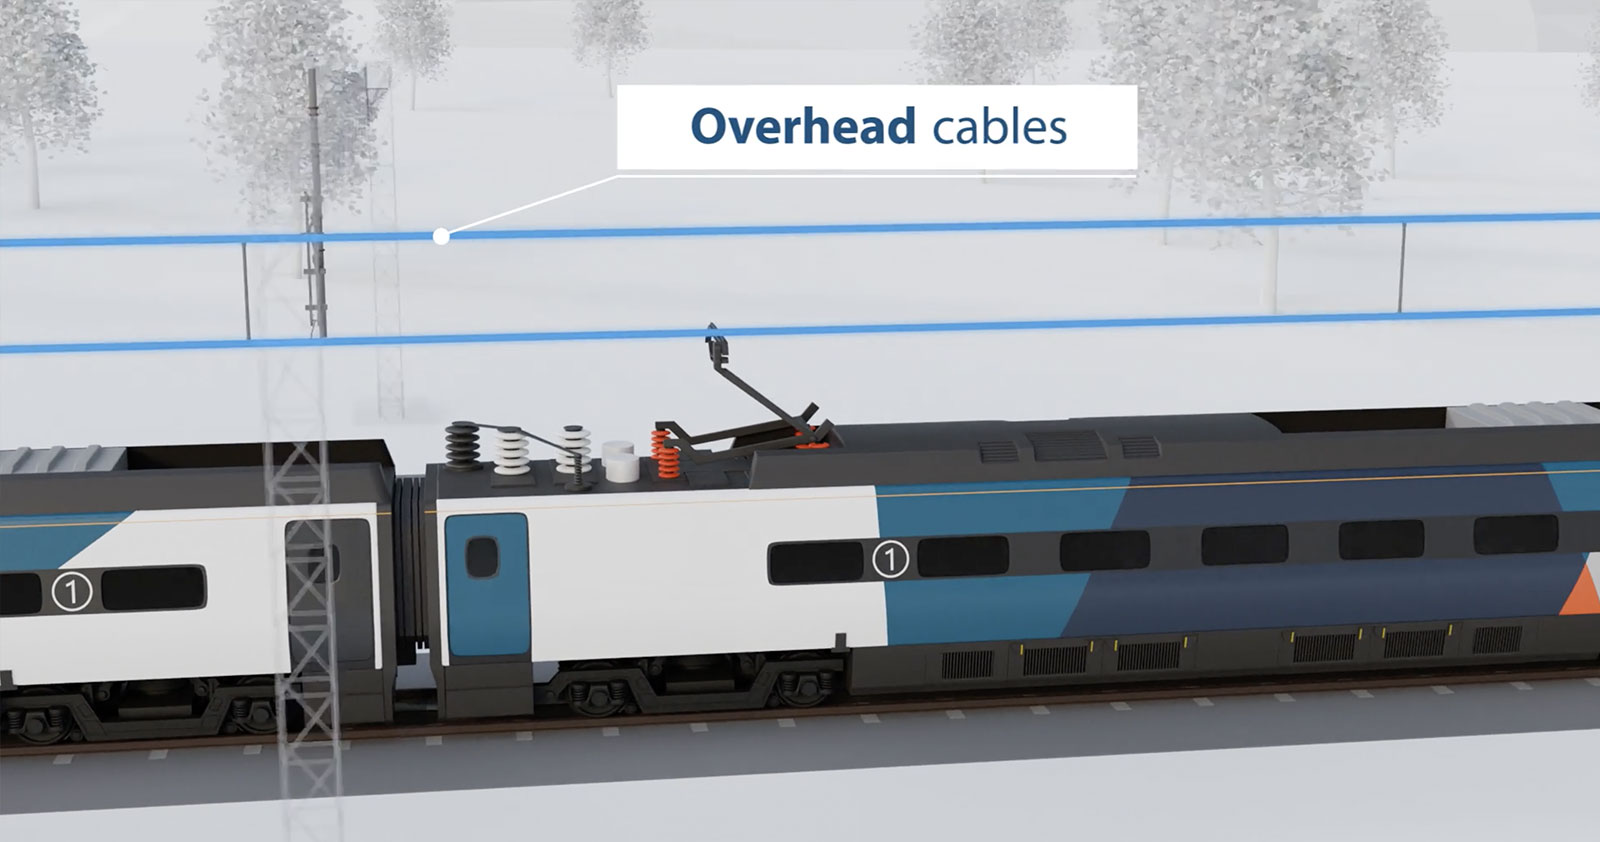 Railways Overhead line equipment cables